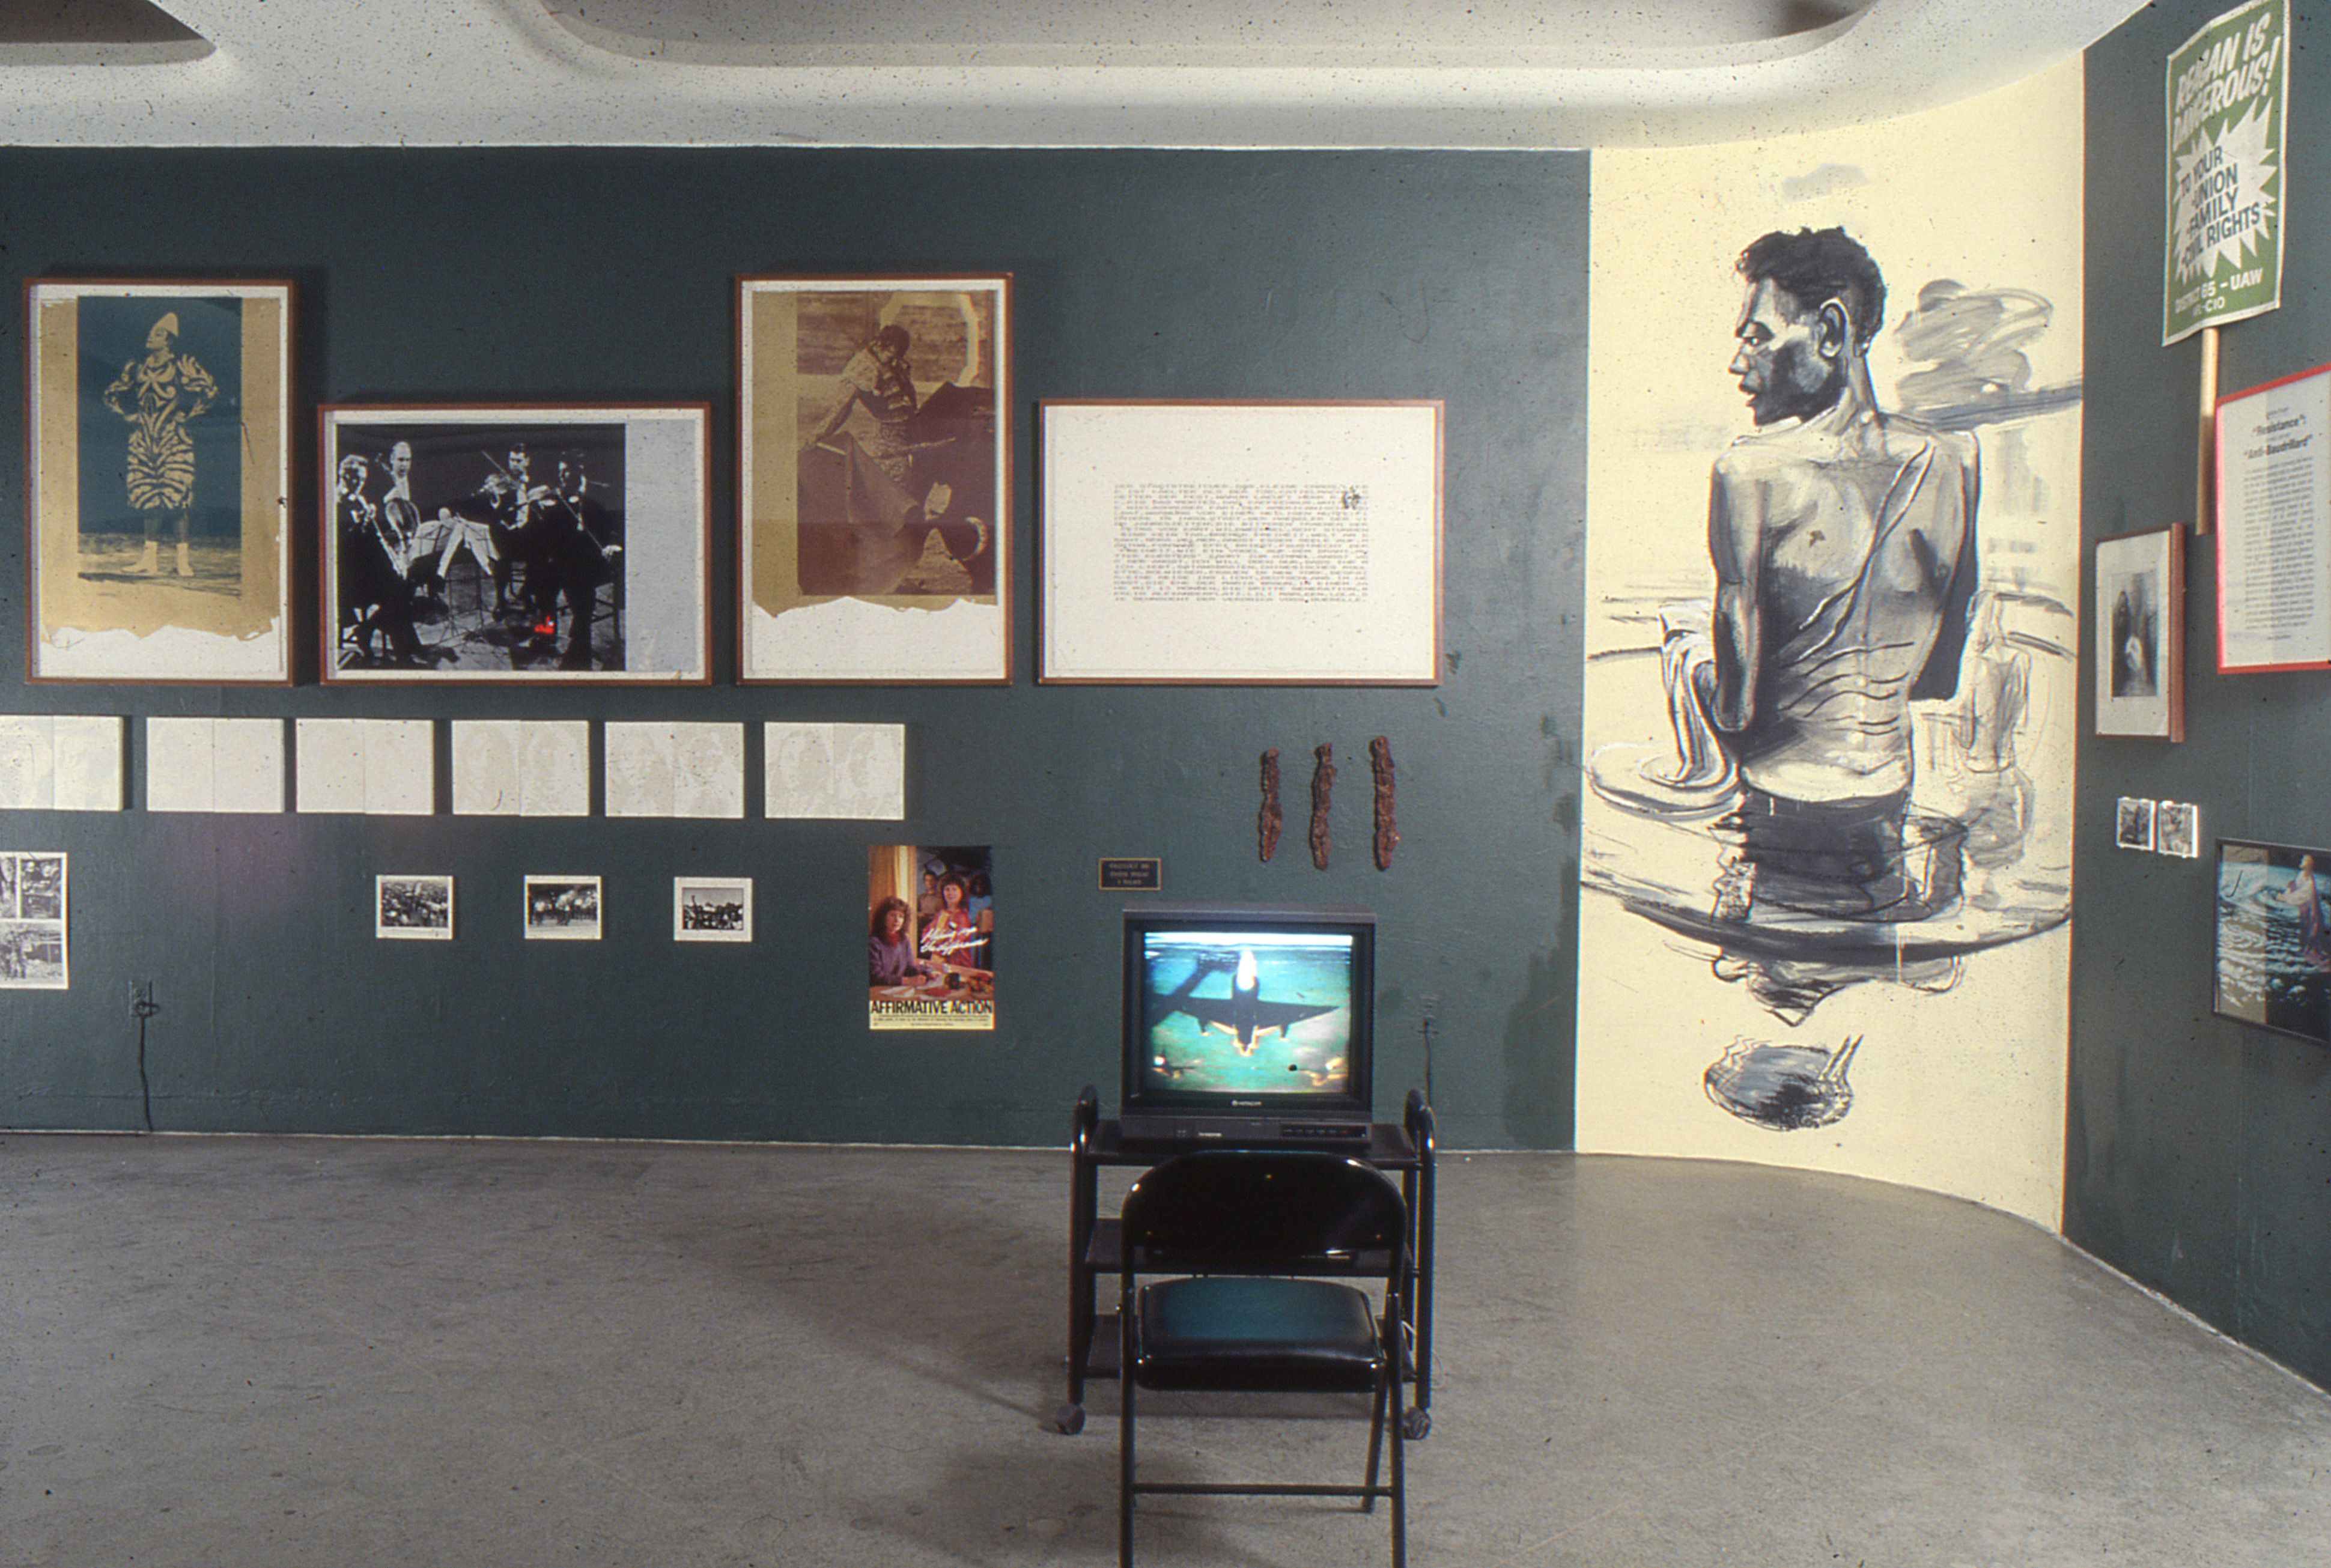 The exhibition 'Anti-Baudrillard' at White Columns, February 6-28, 1987. Image courtesy of White Columns.